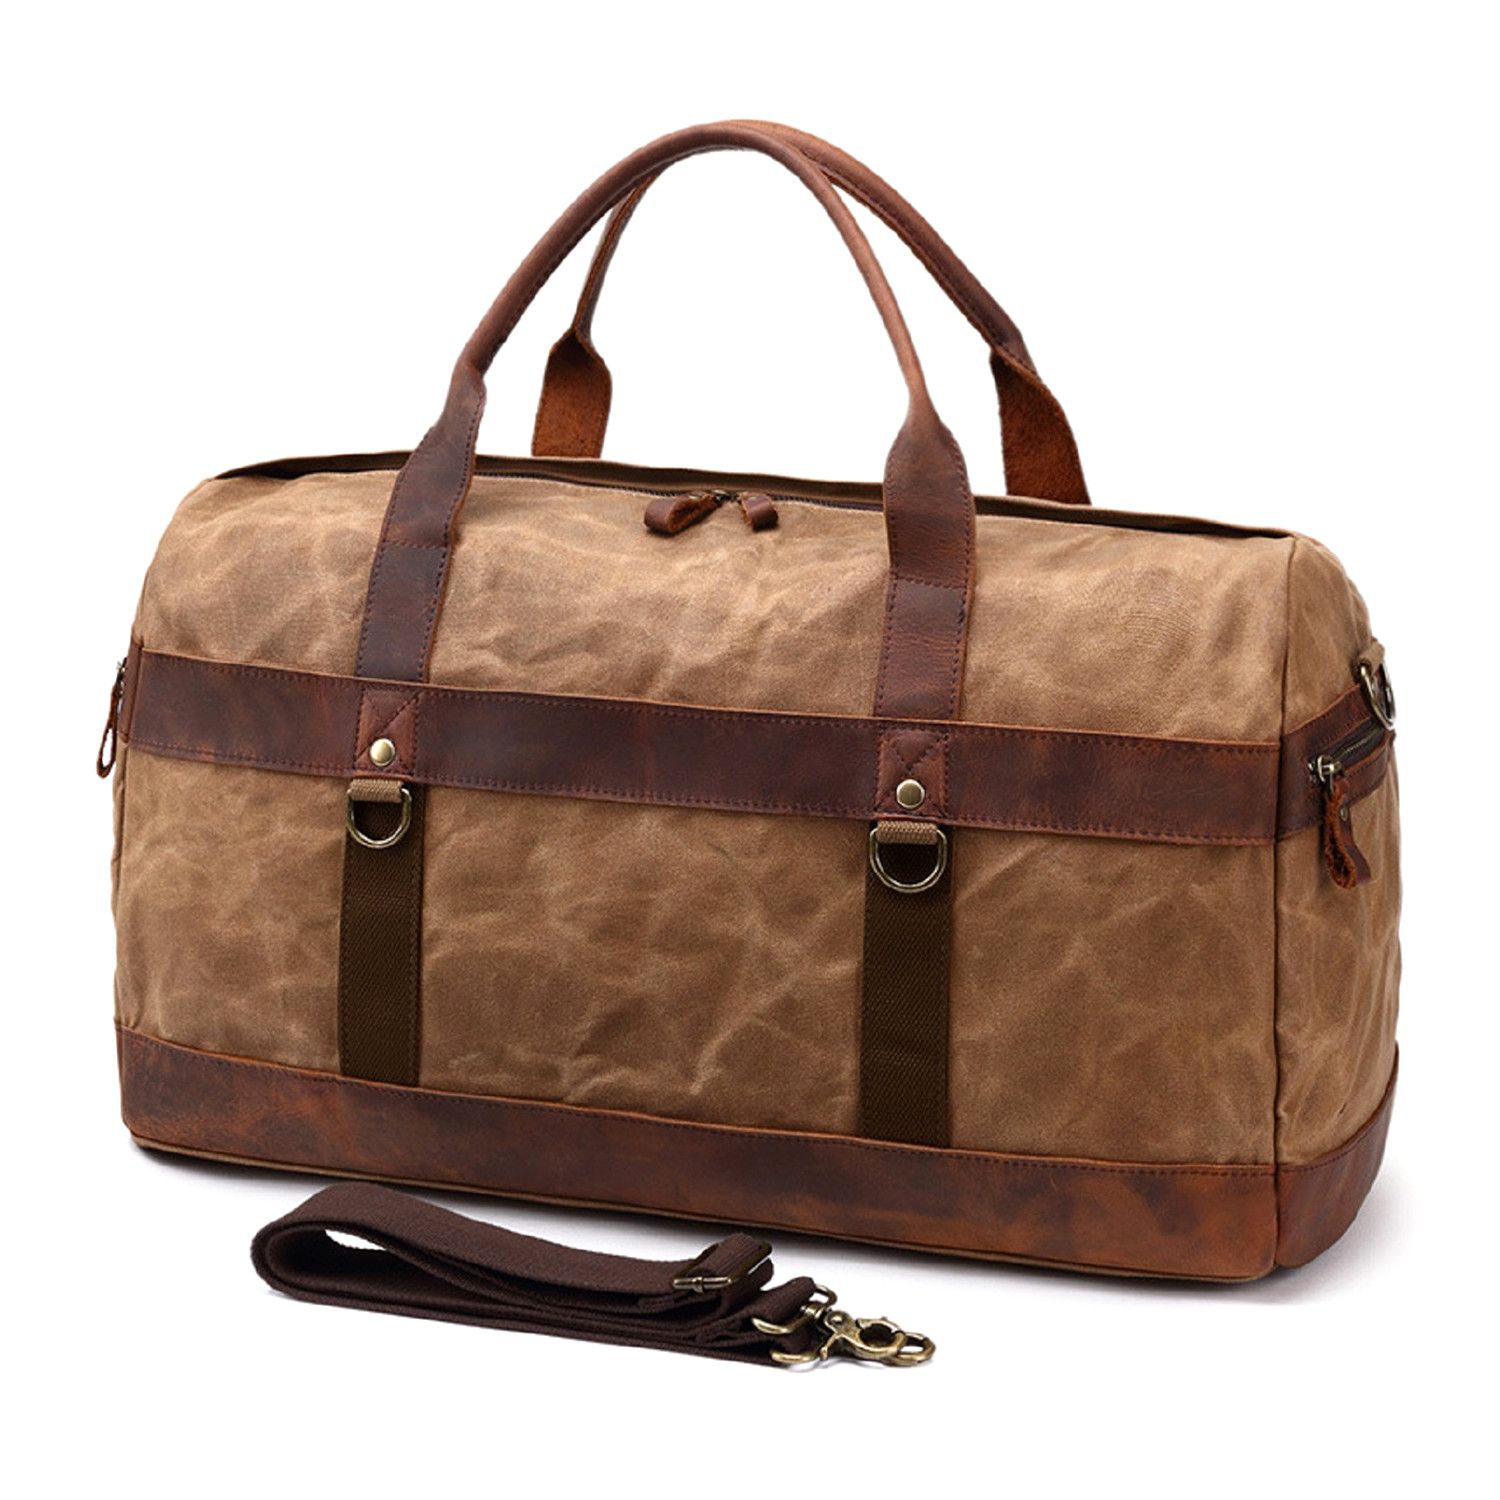 Duffel Bag With Side Zipper // Khaki - OwnBag - Touch of Modern